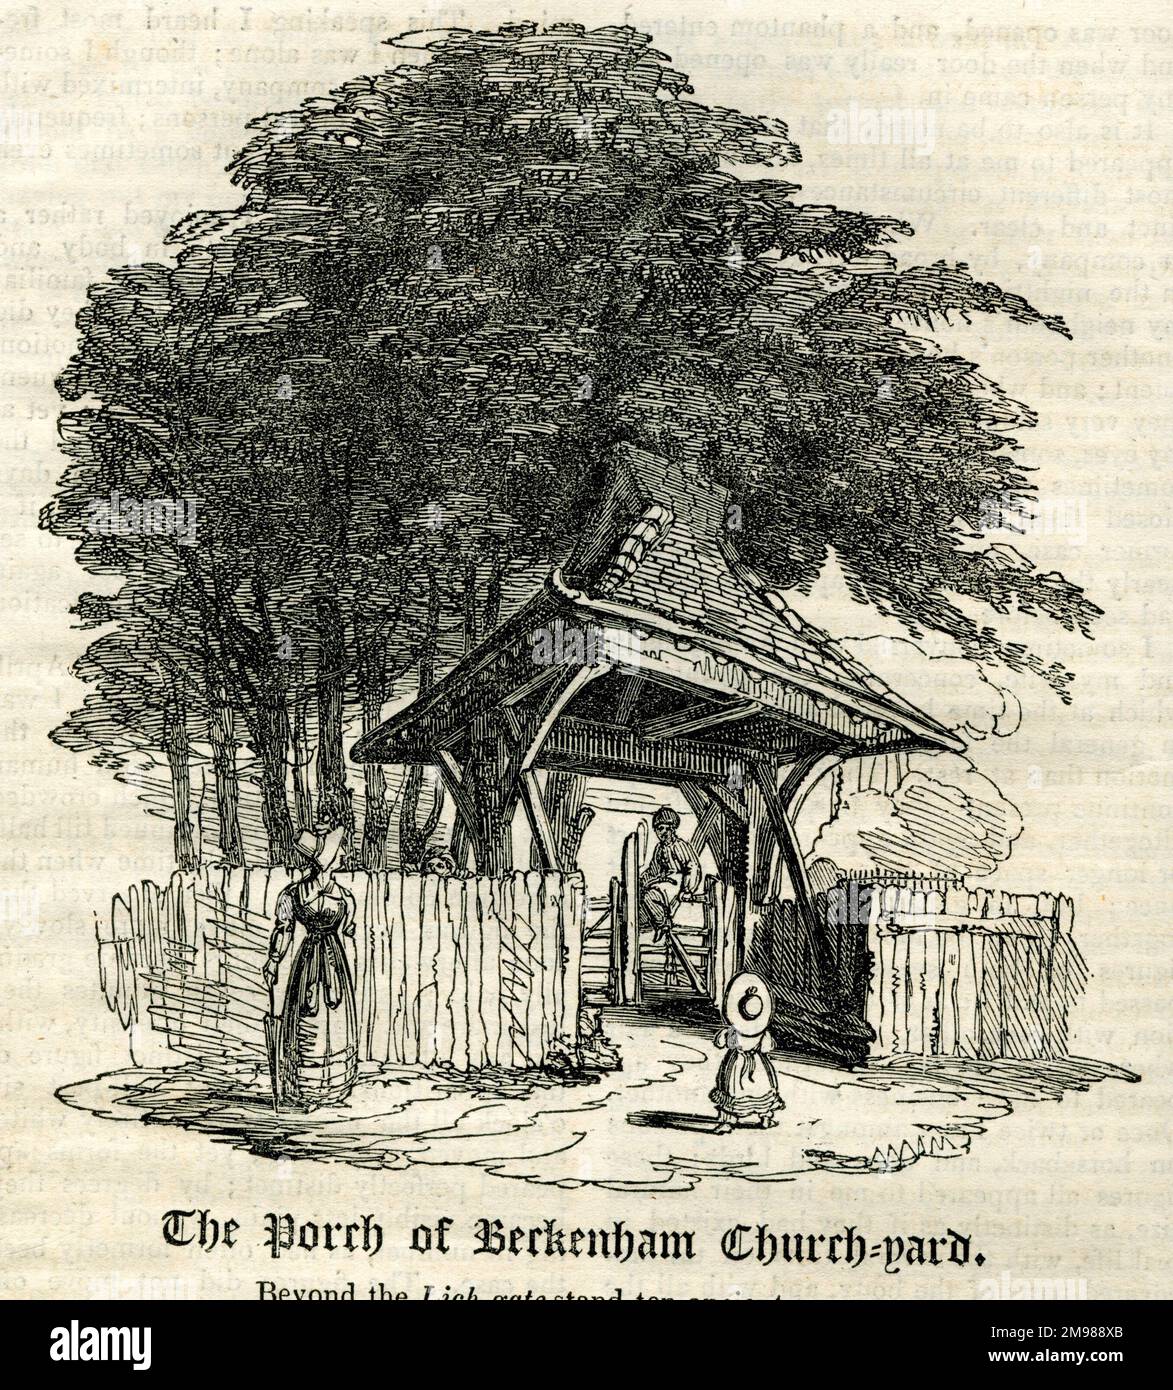 The Porch of Beckenham Church-yard, Kent. Stock Photo